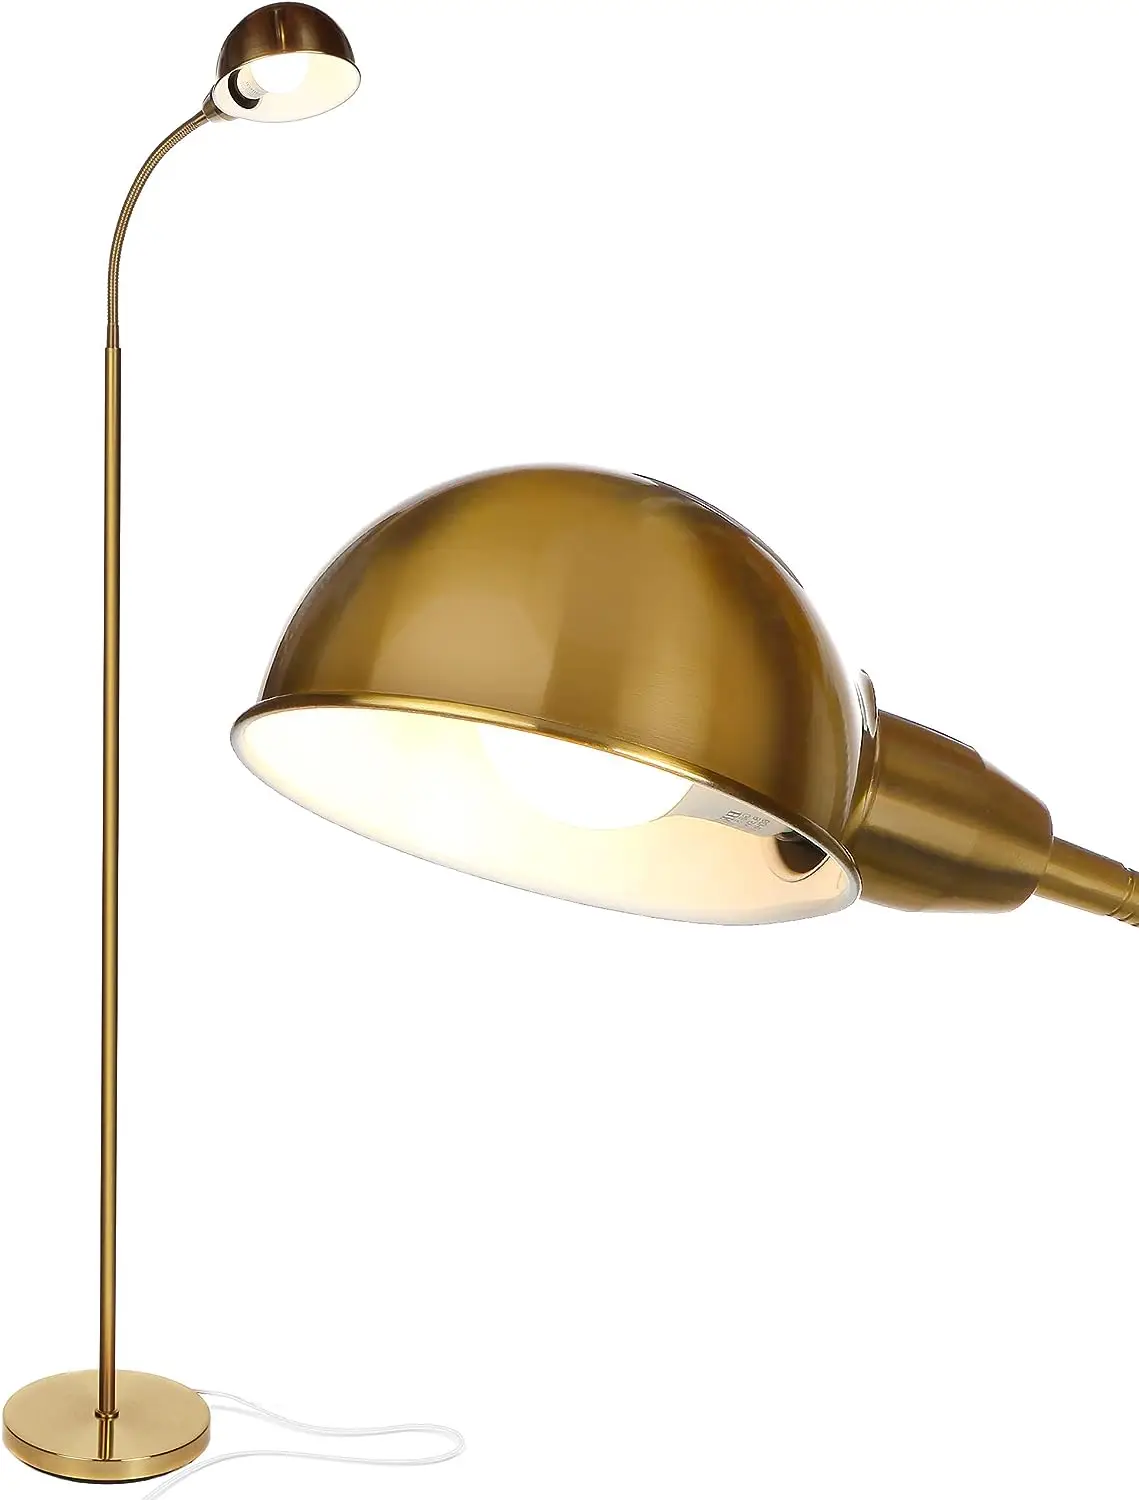 

LED Floor Lamp, Free Standing Corner Pole Light with Adjustable Gooseneck, Tall Bright Skinny Lamp for Office Desk, Living Room